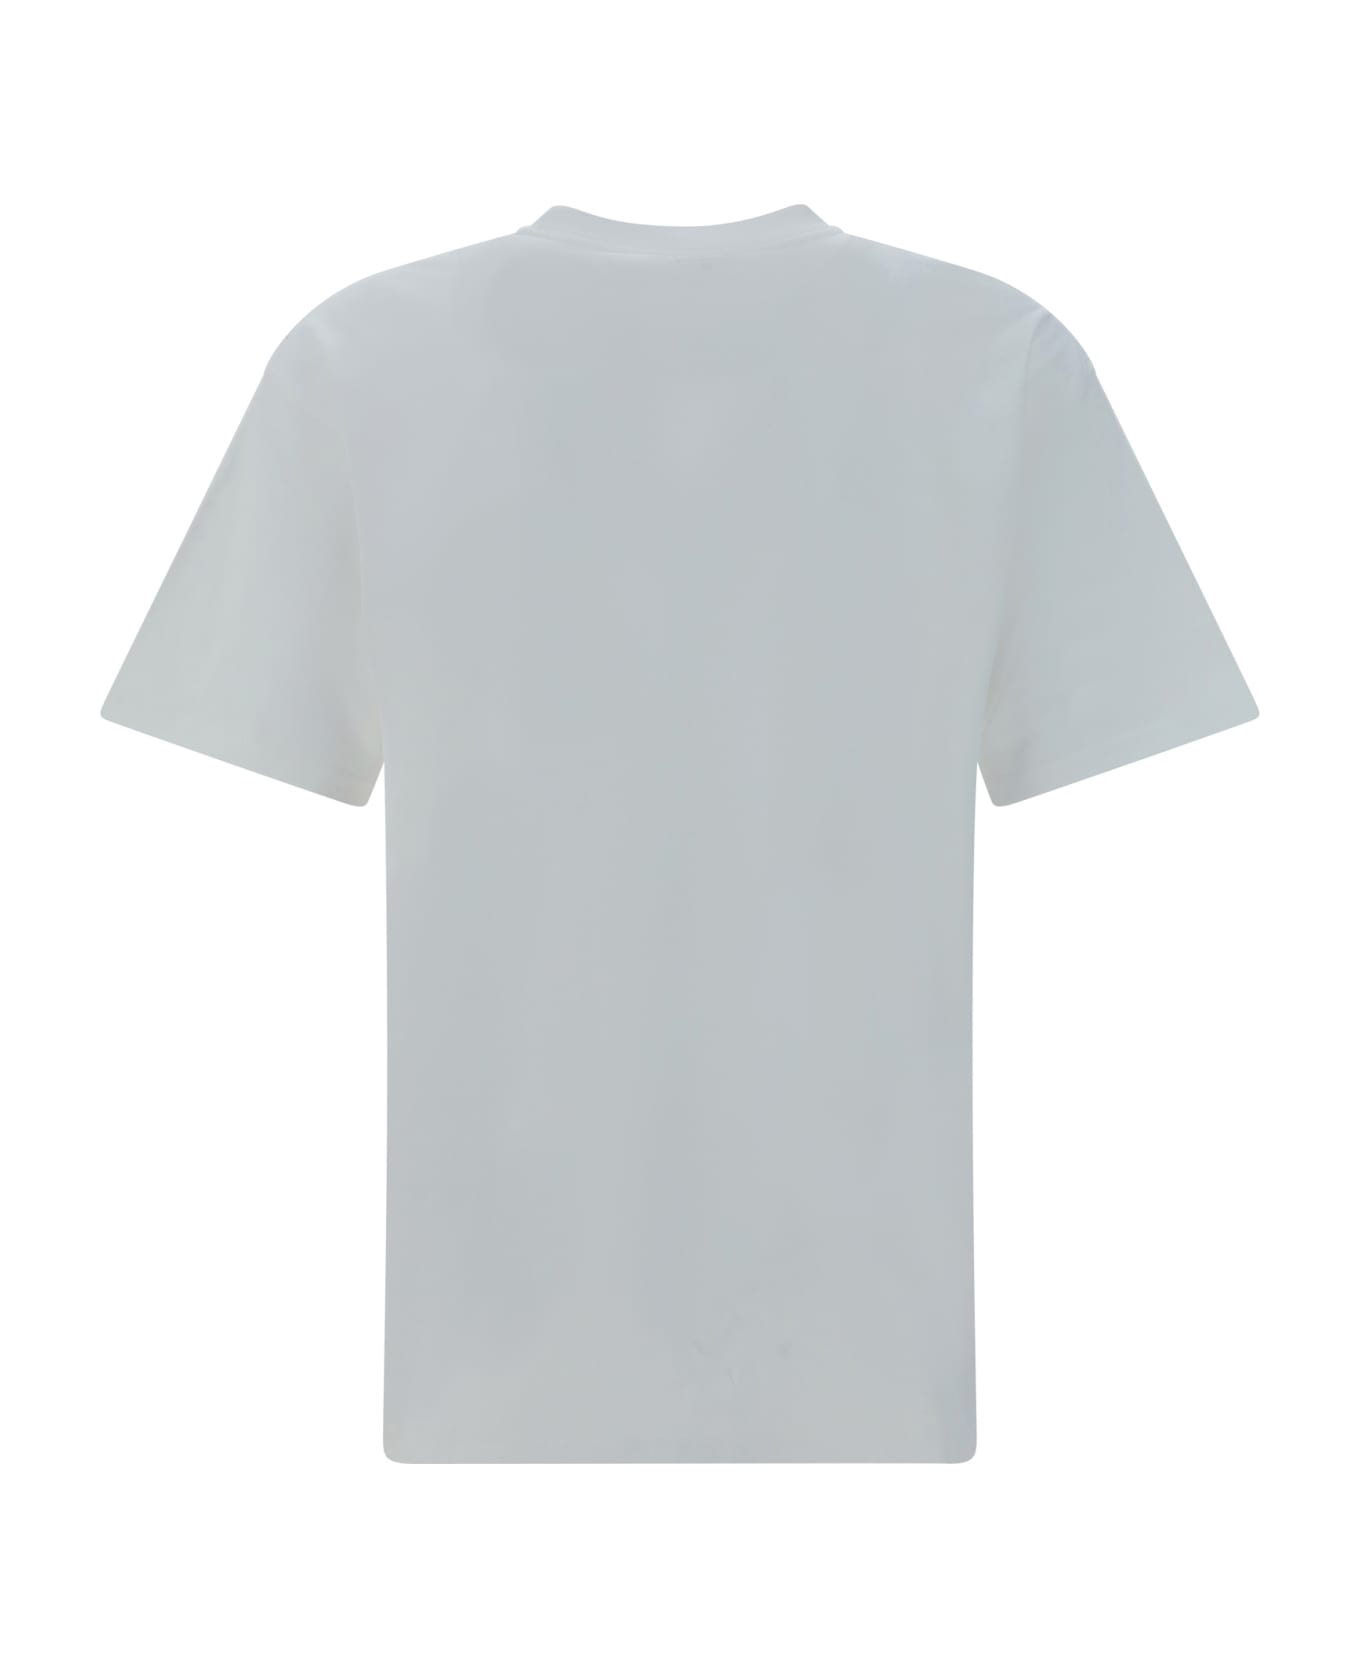 Carhartt Drip T-shirt - White シャツ